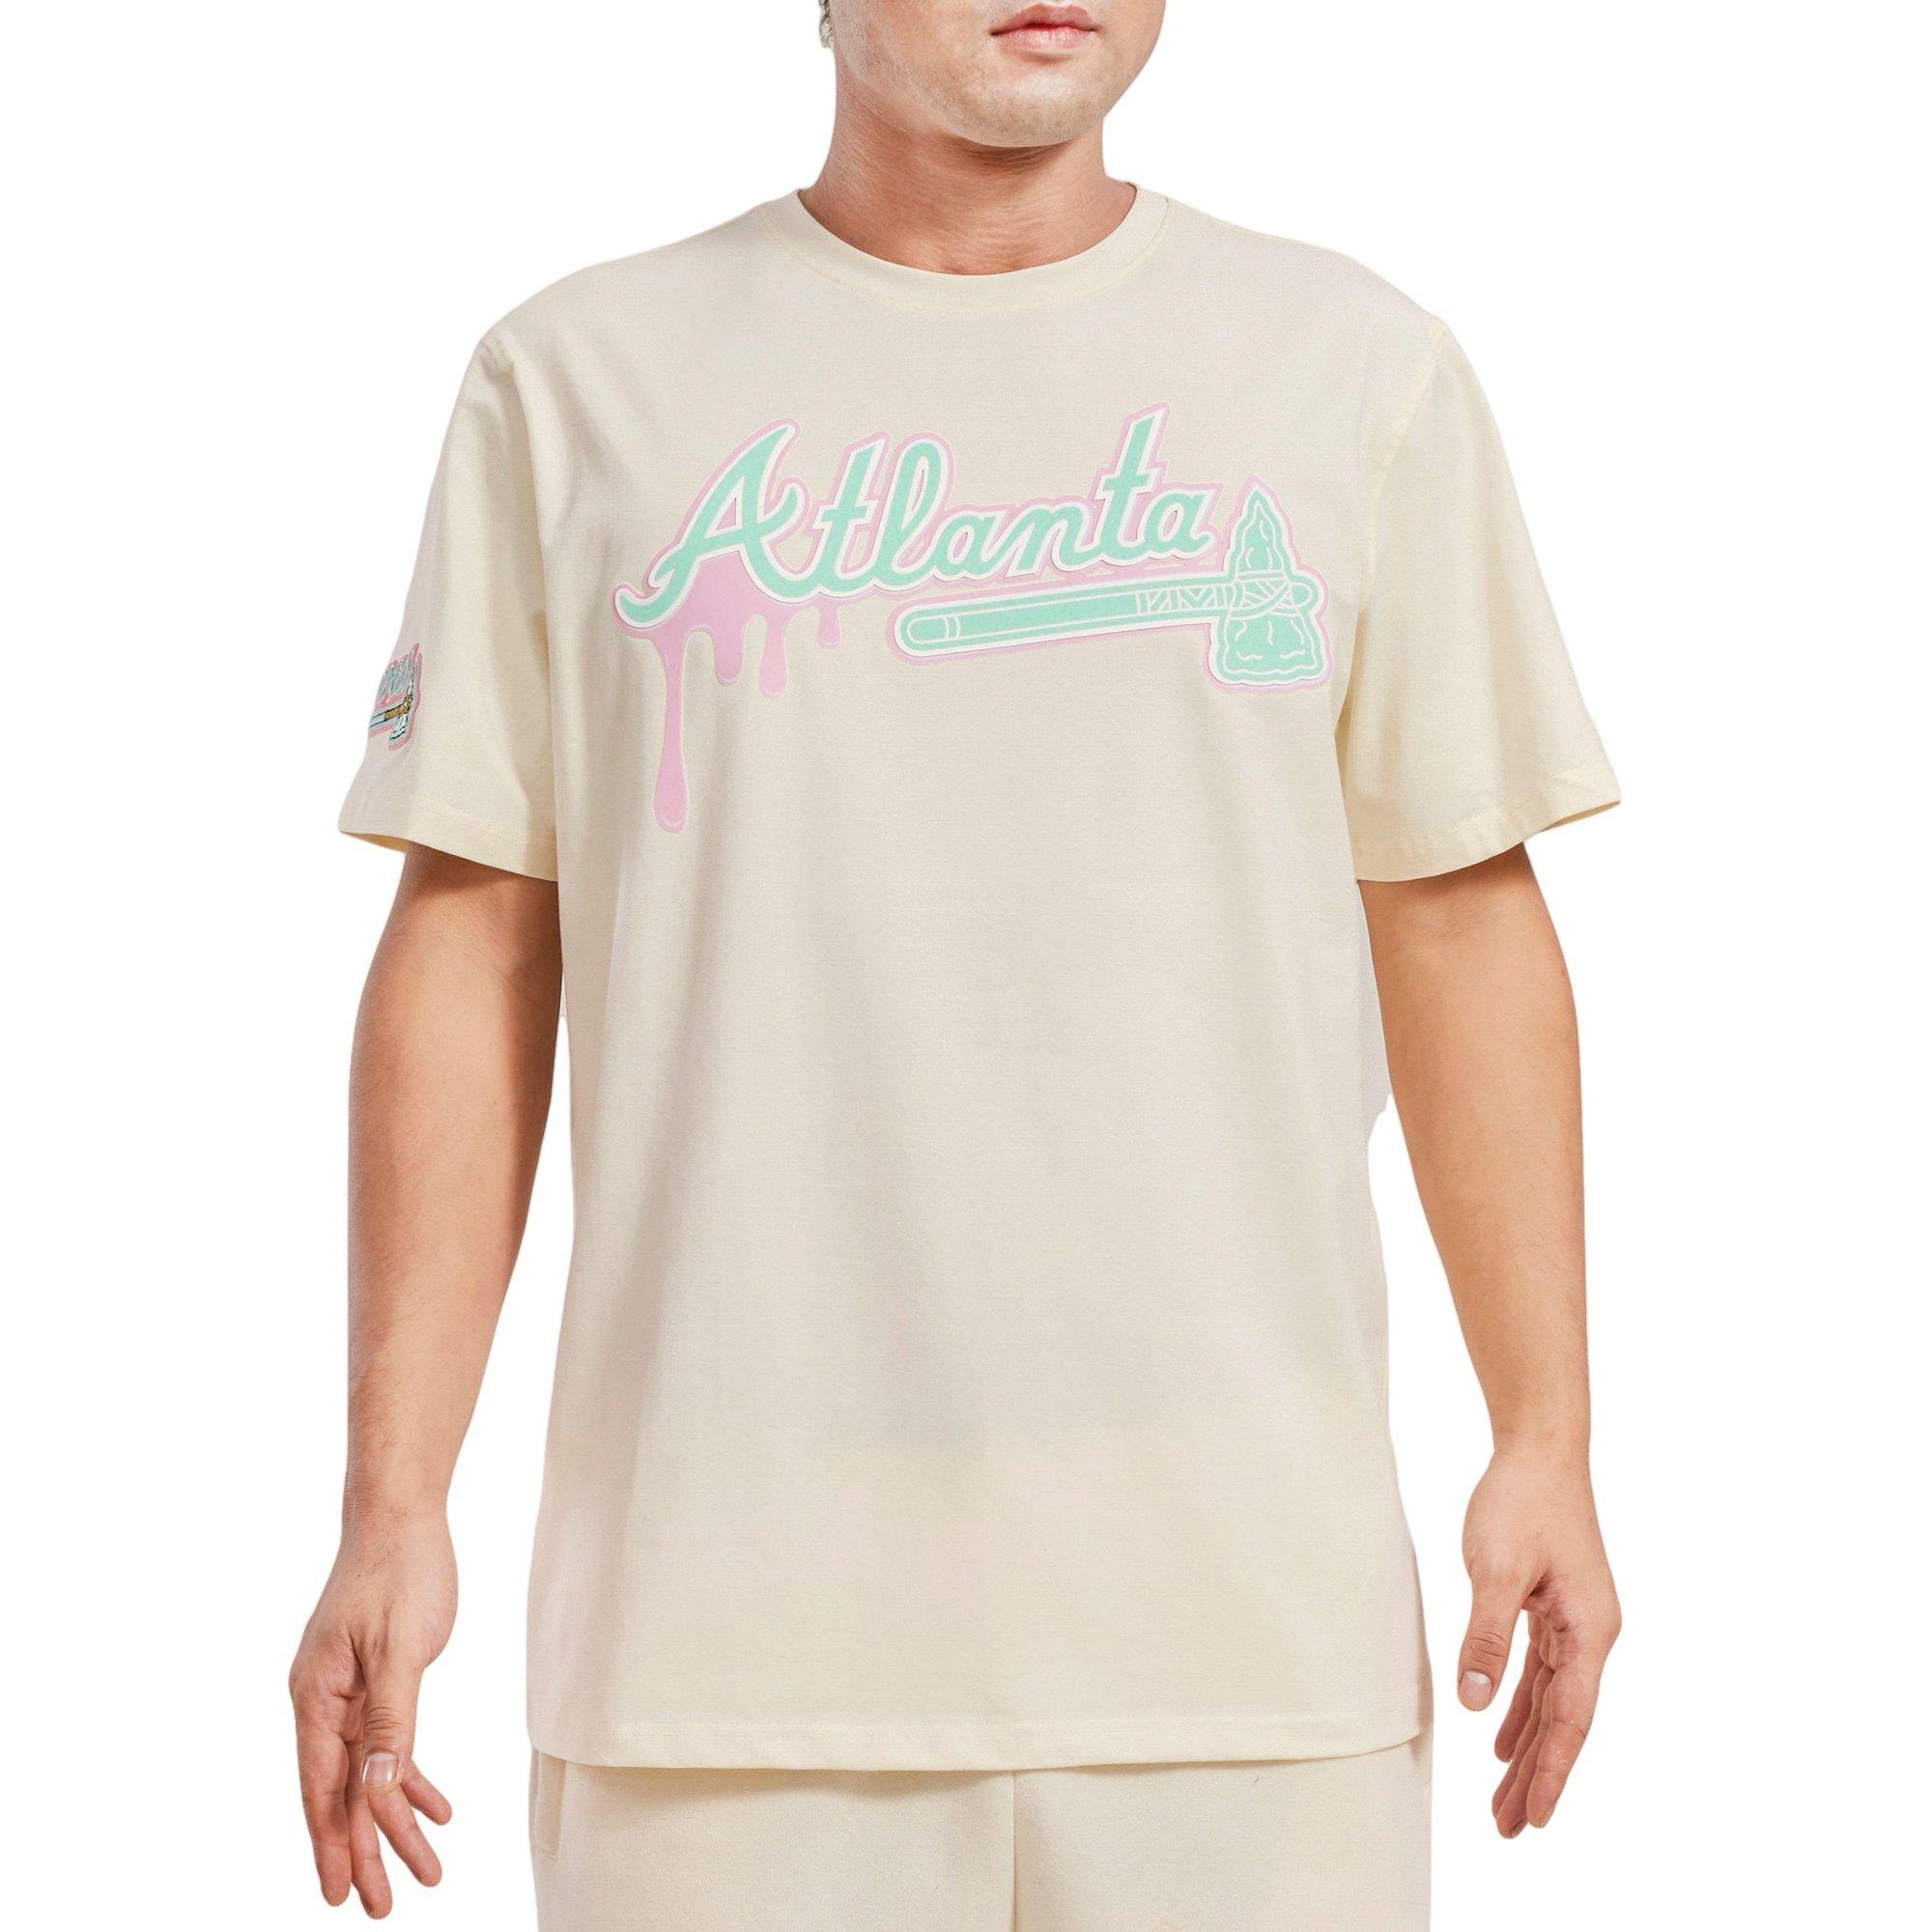 atlanta braves shirts for sale